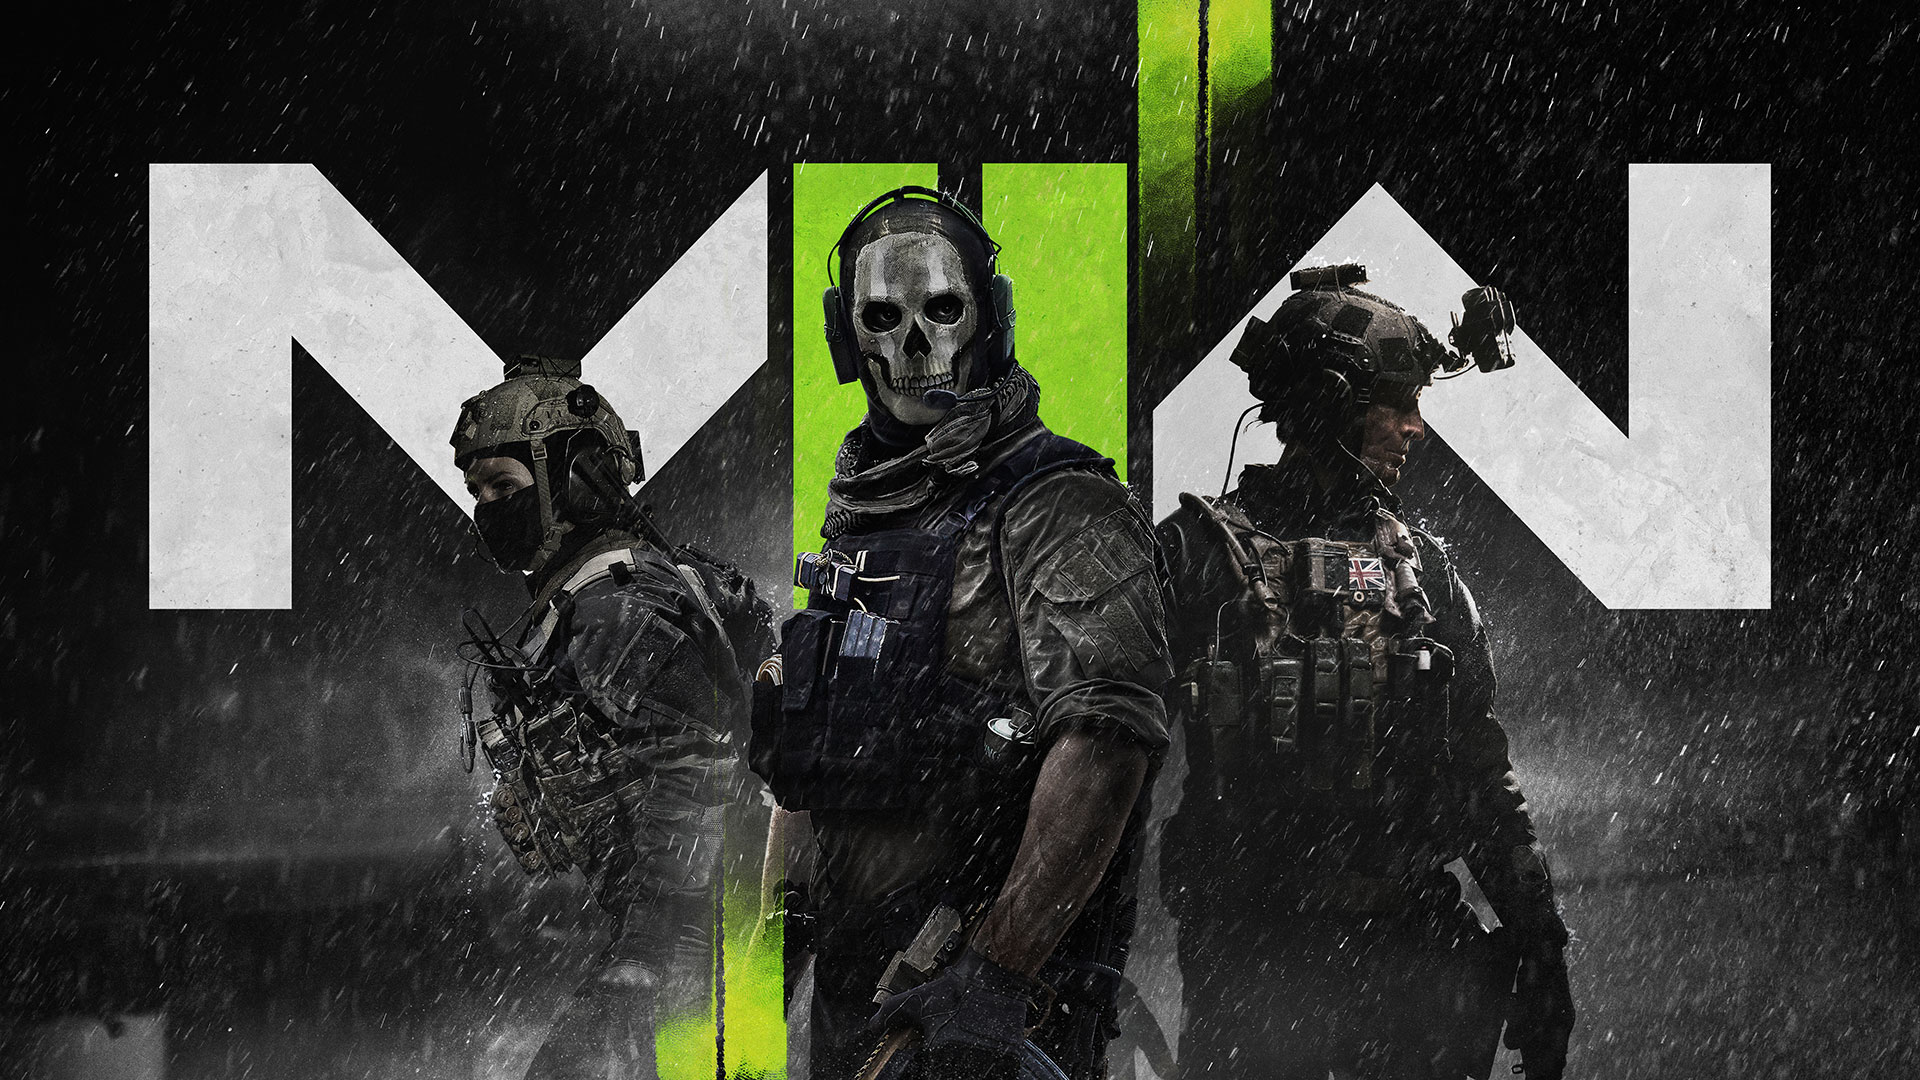 Call of Duty: Modern Warfare II review [Xbox Series X/S]